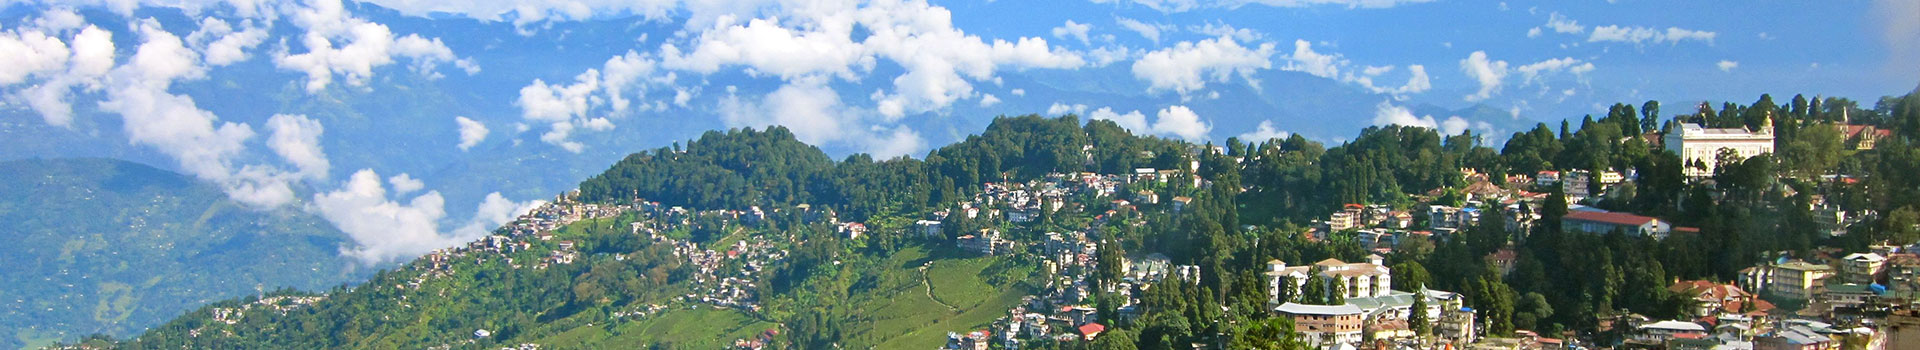 Gangtok-Darjeeling Tour With Lachung 05 NIGHTS / 06 DAYS